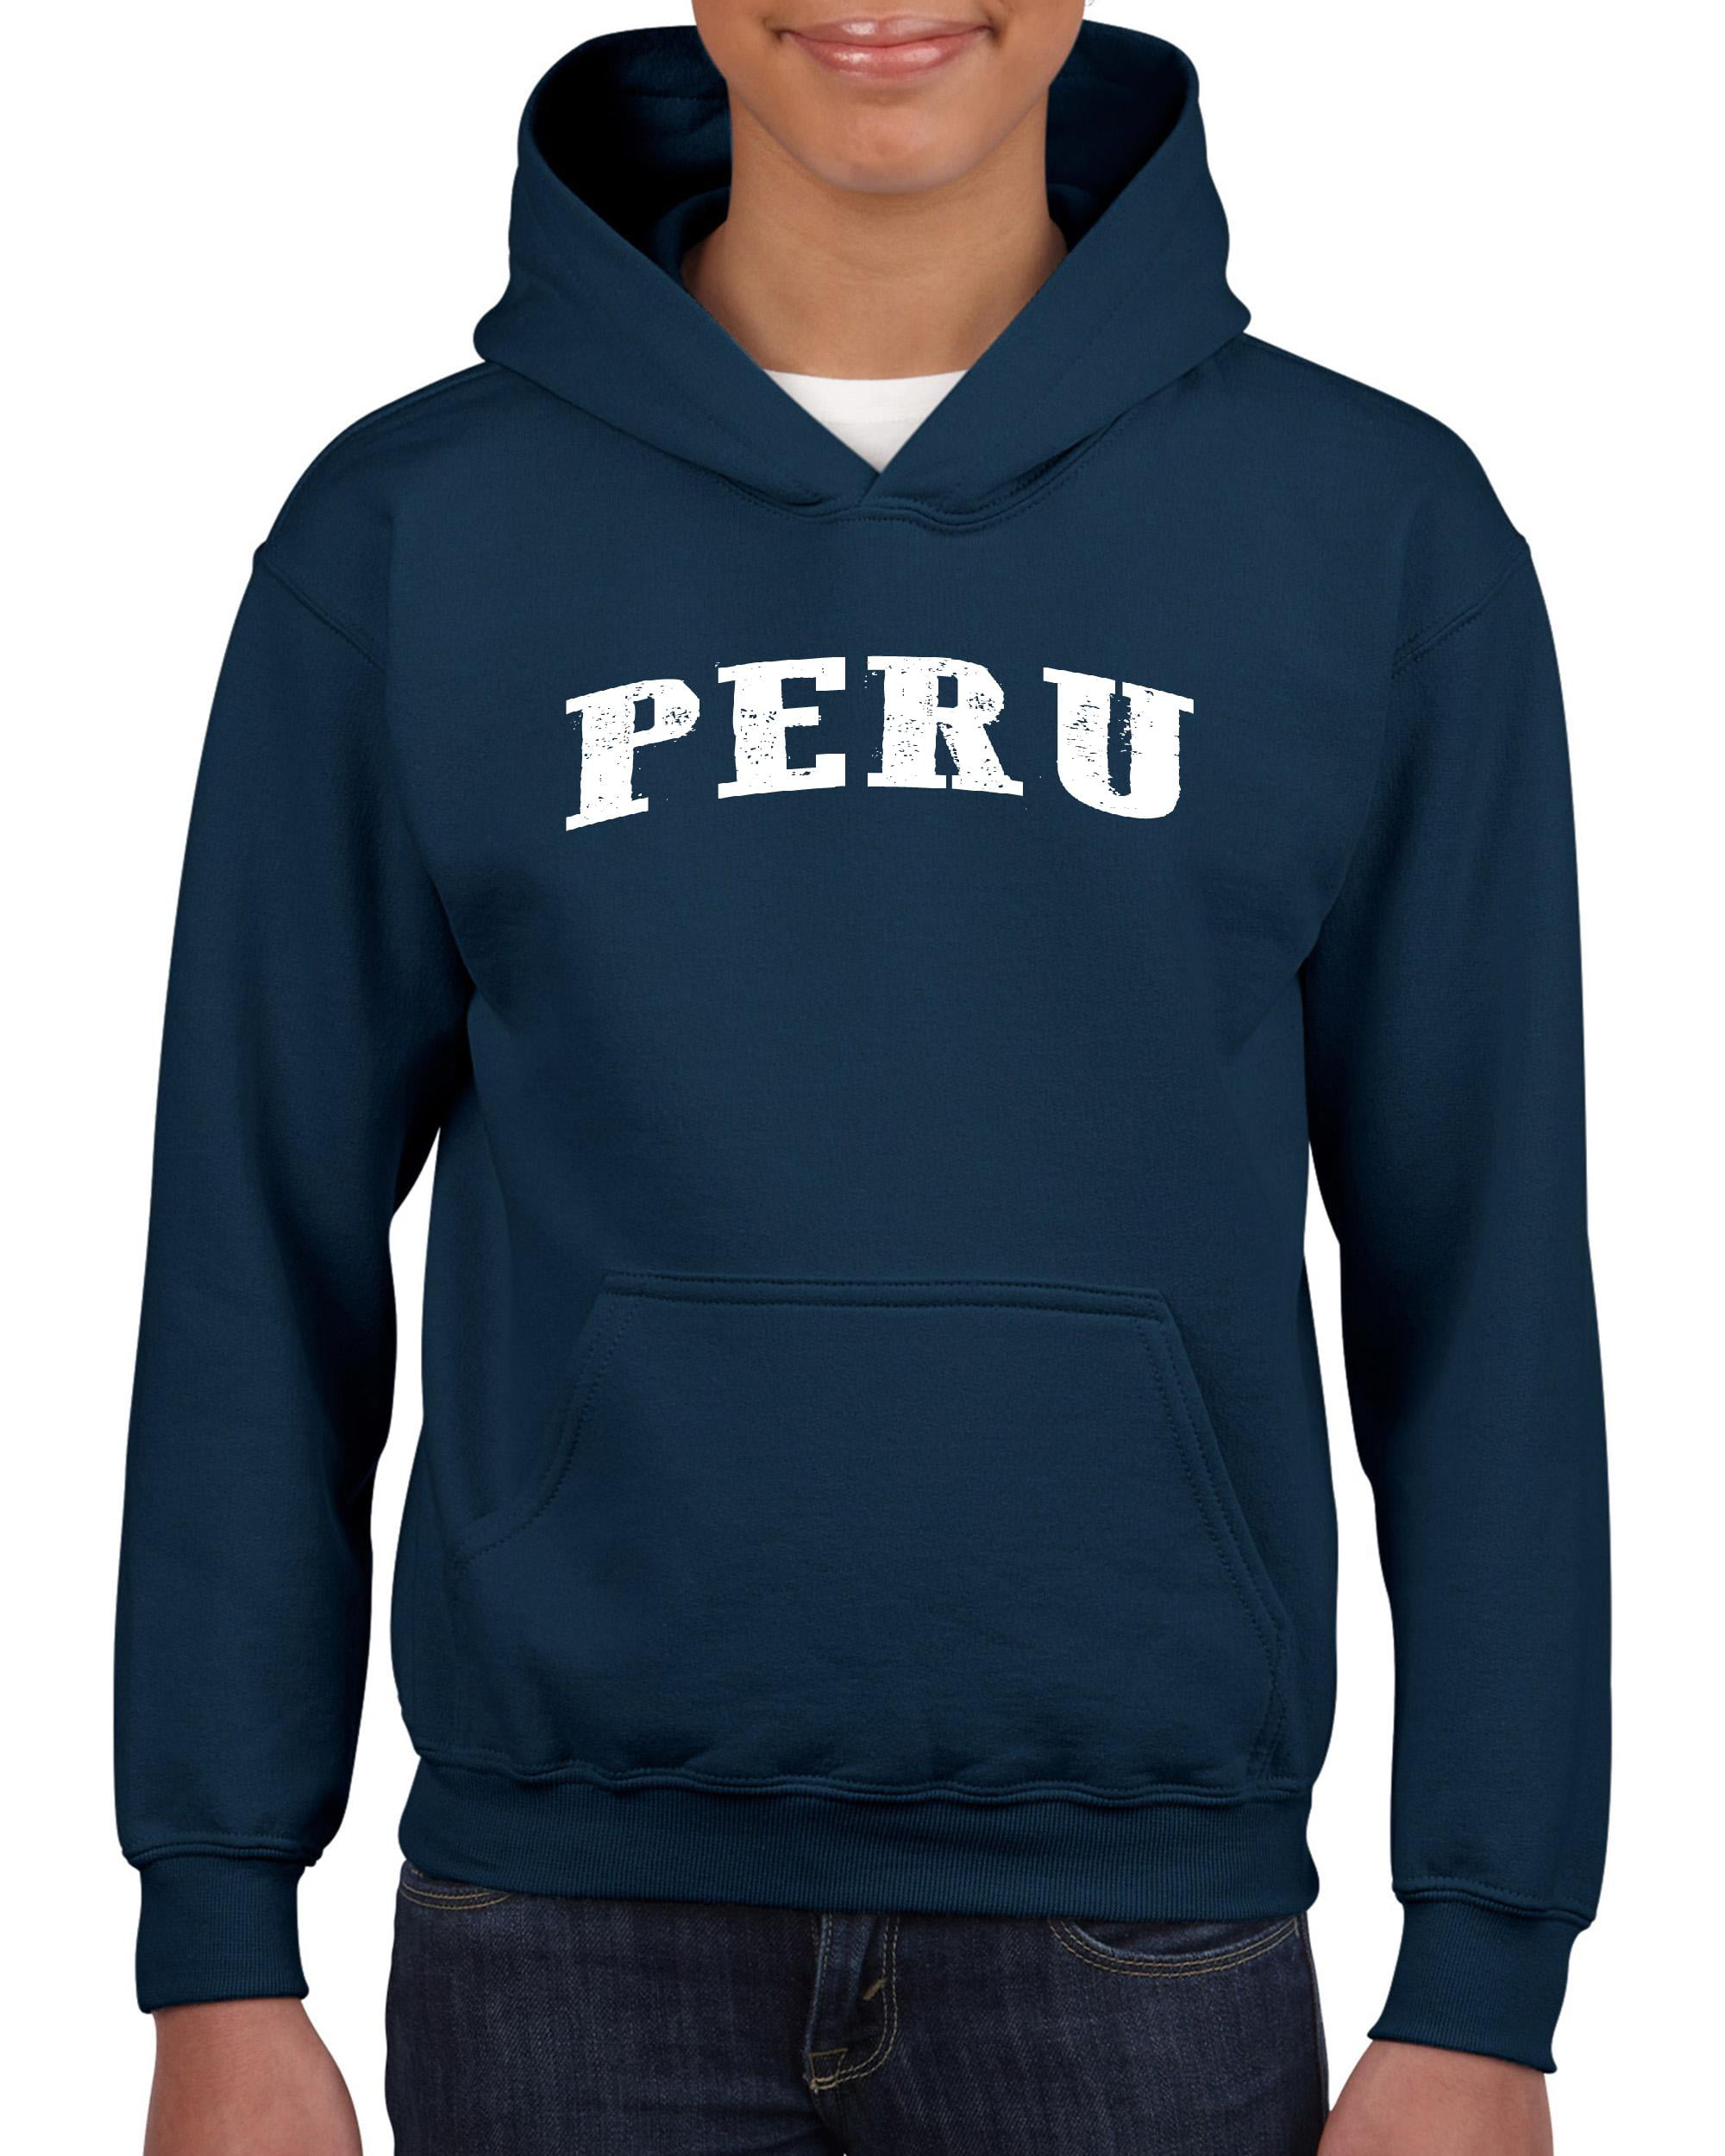 Artix - Big Boys Hoodies and Sweatshirts - Peru - Walmart.com